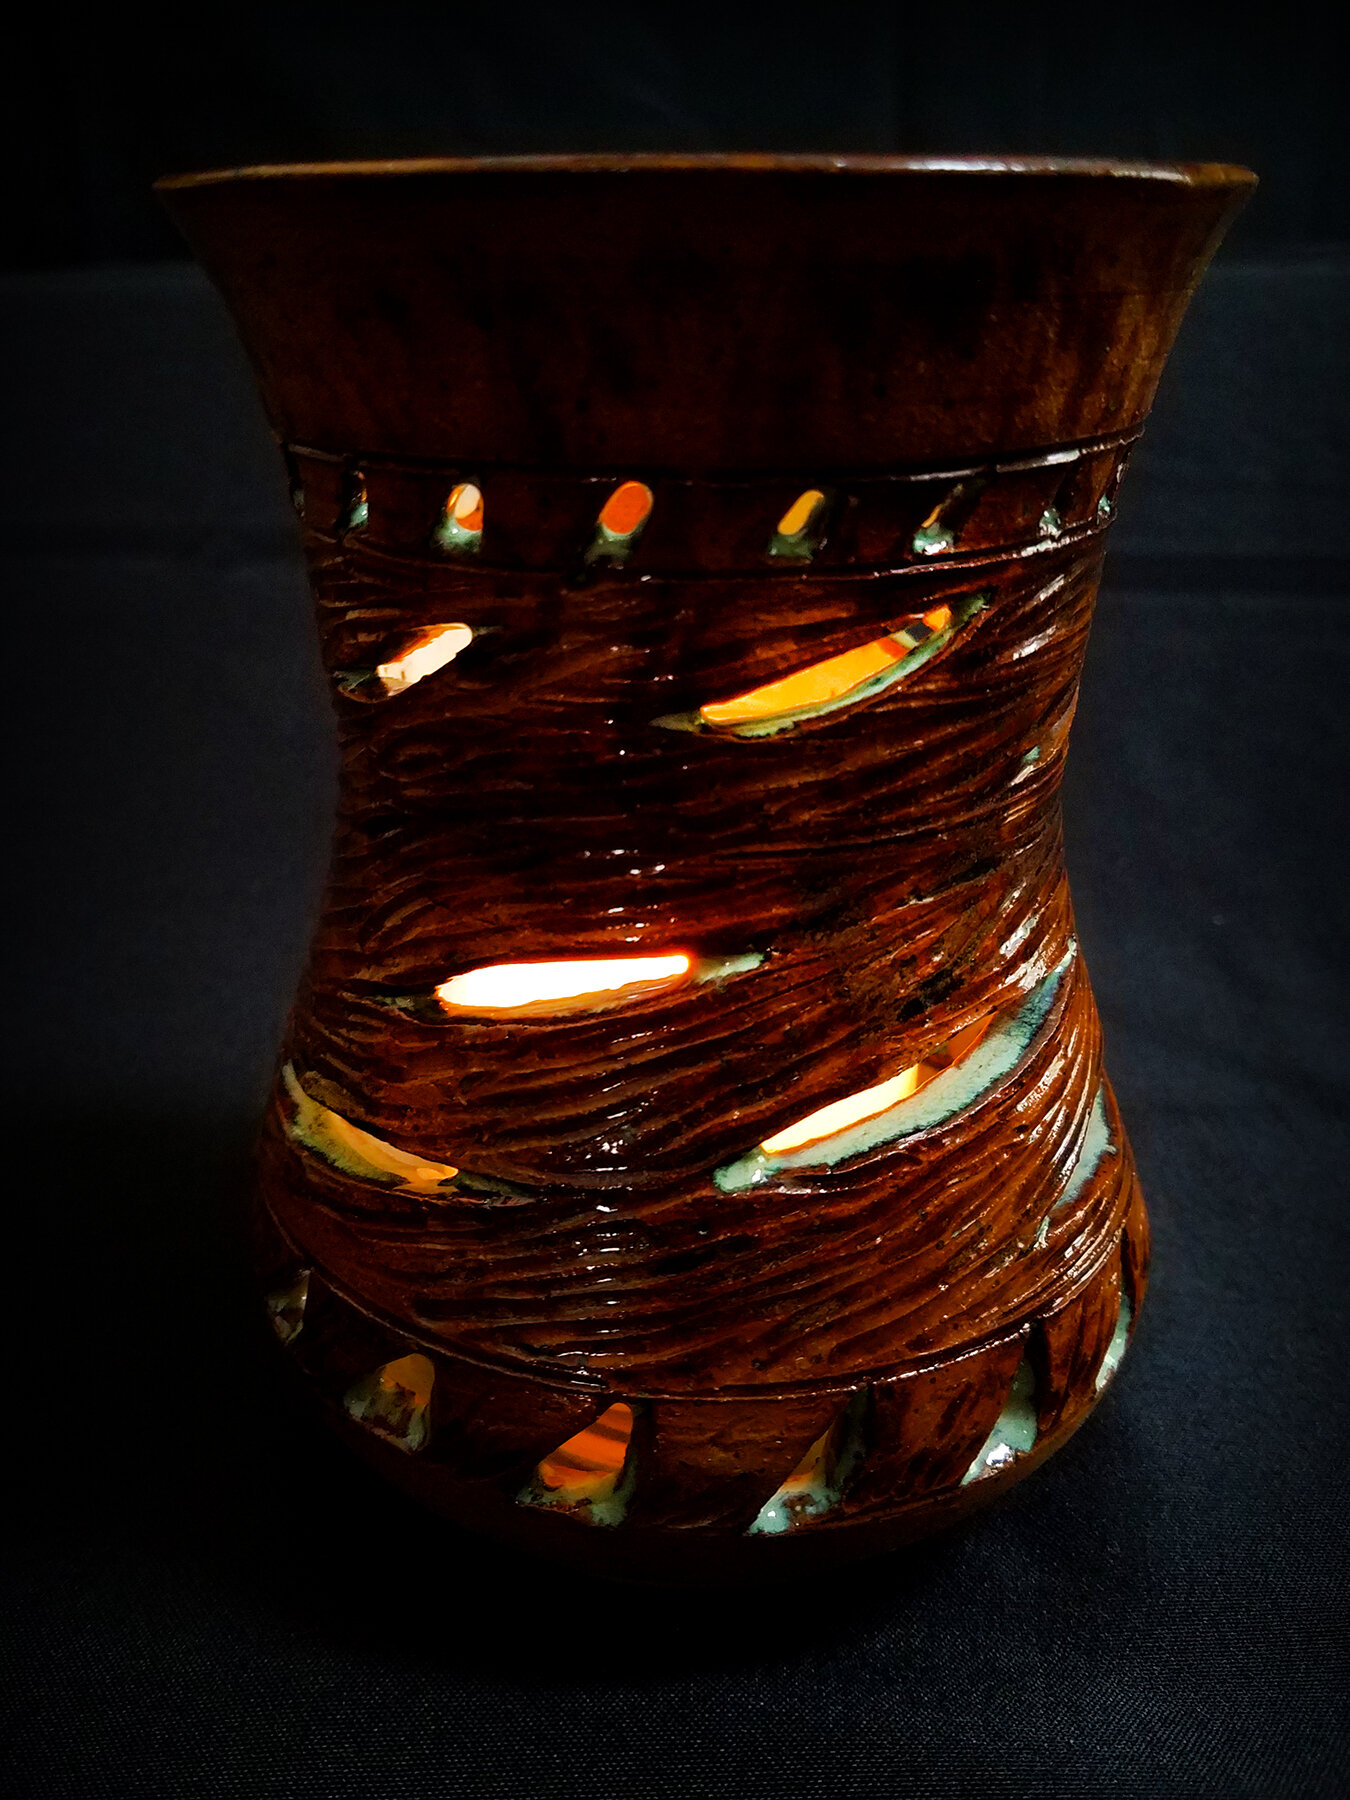 luminary 2 corinne hansen art ceramics pottery web.jpg